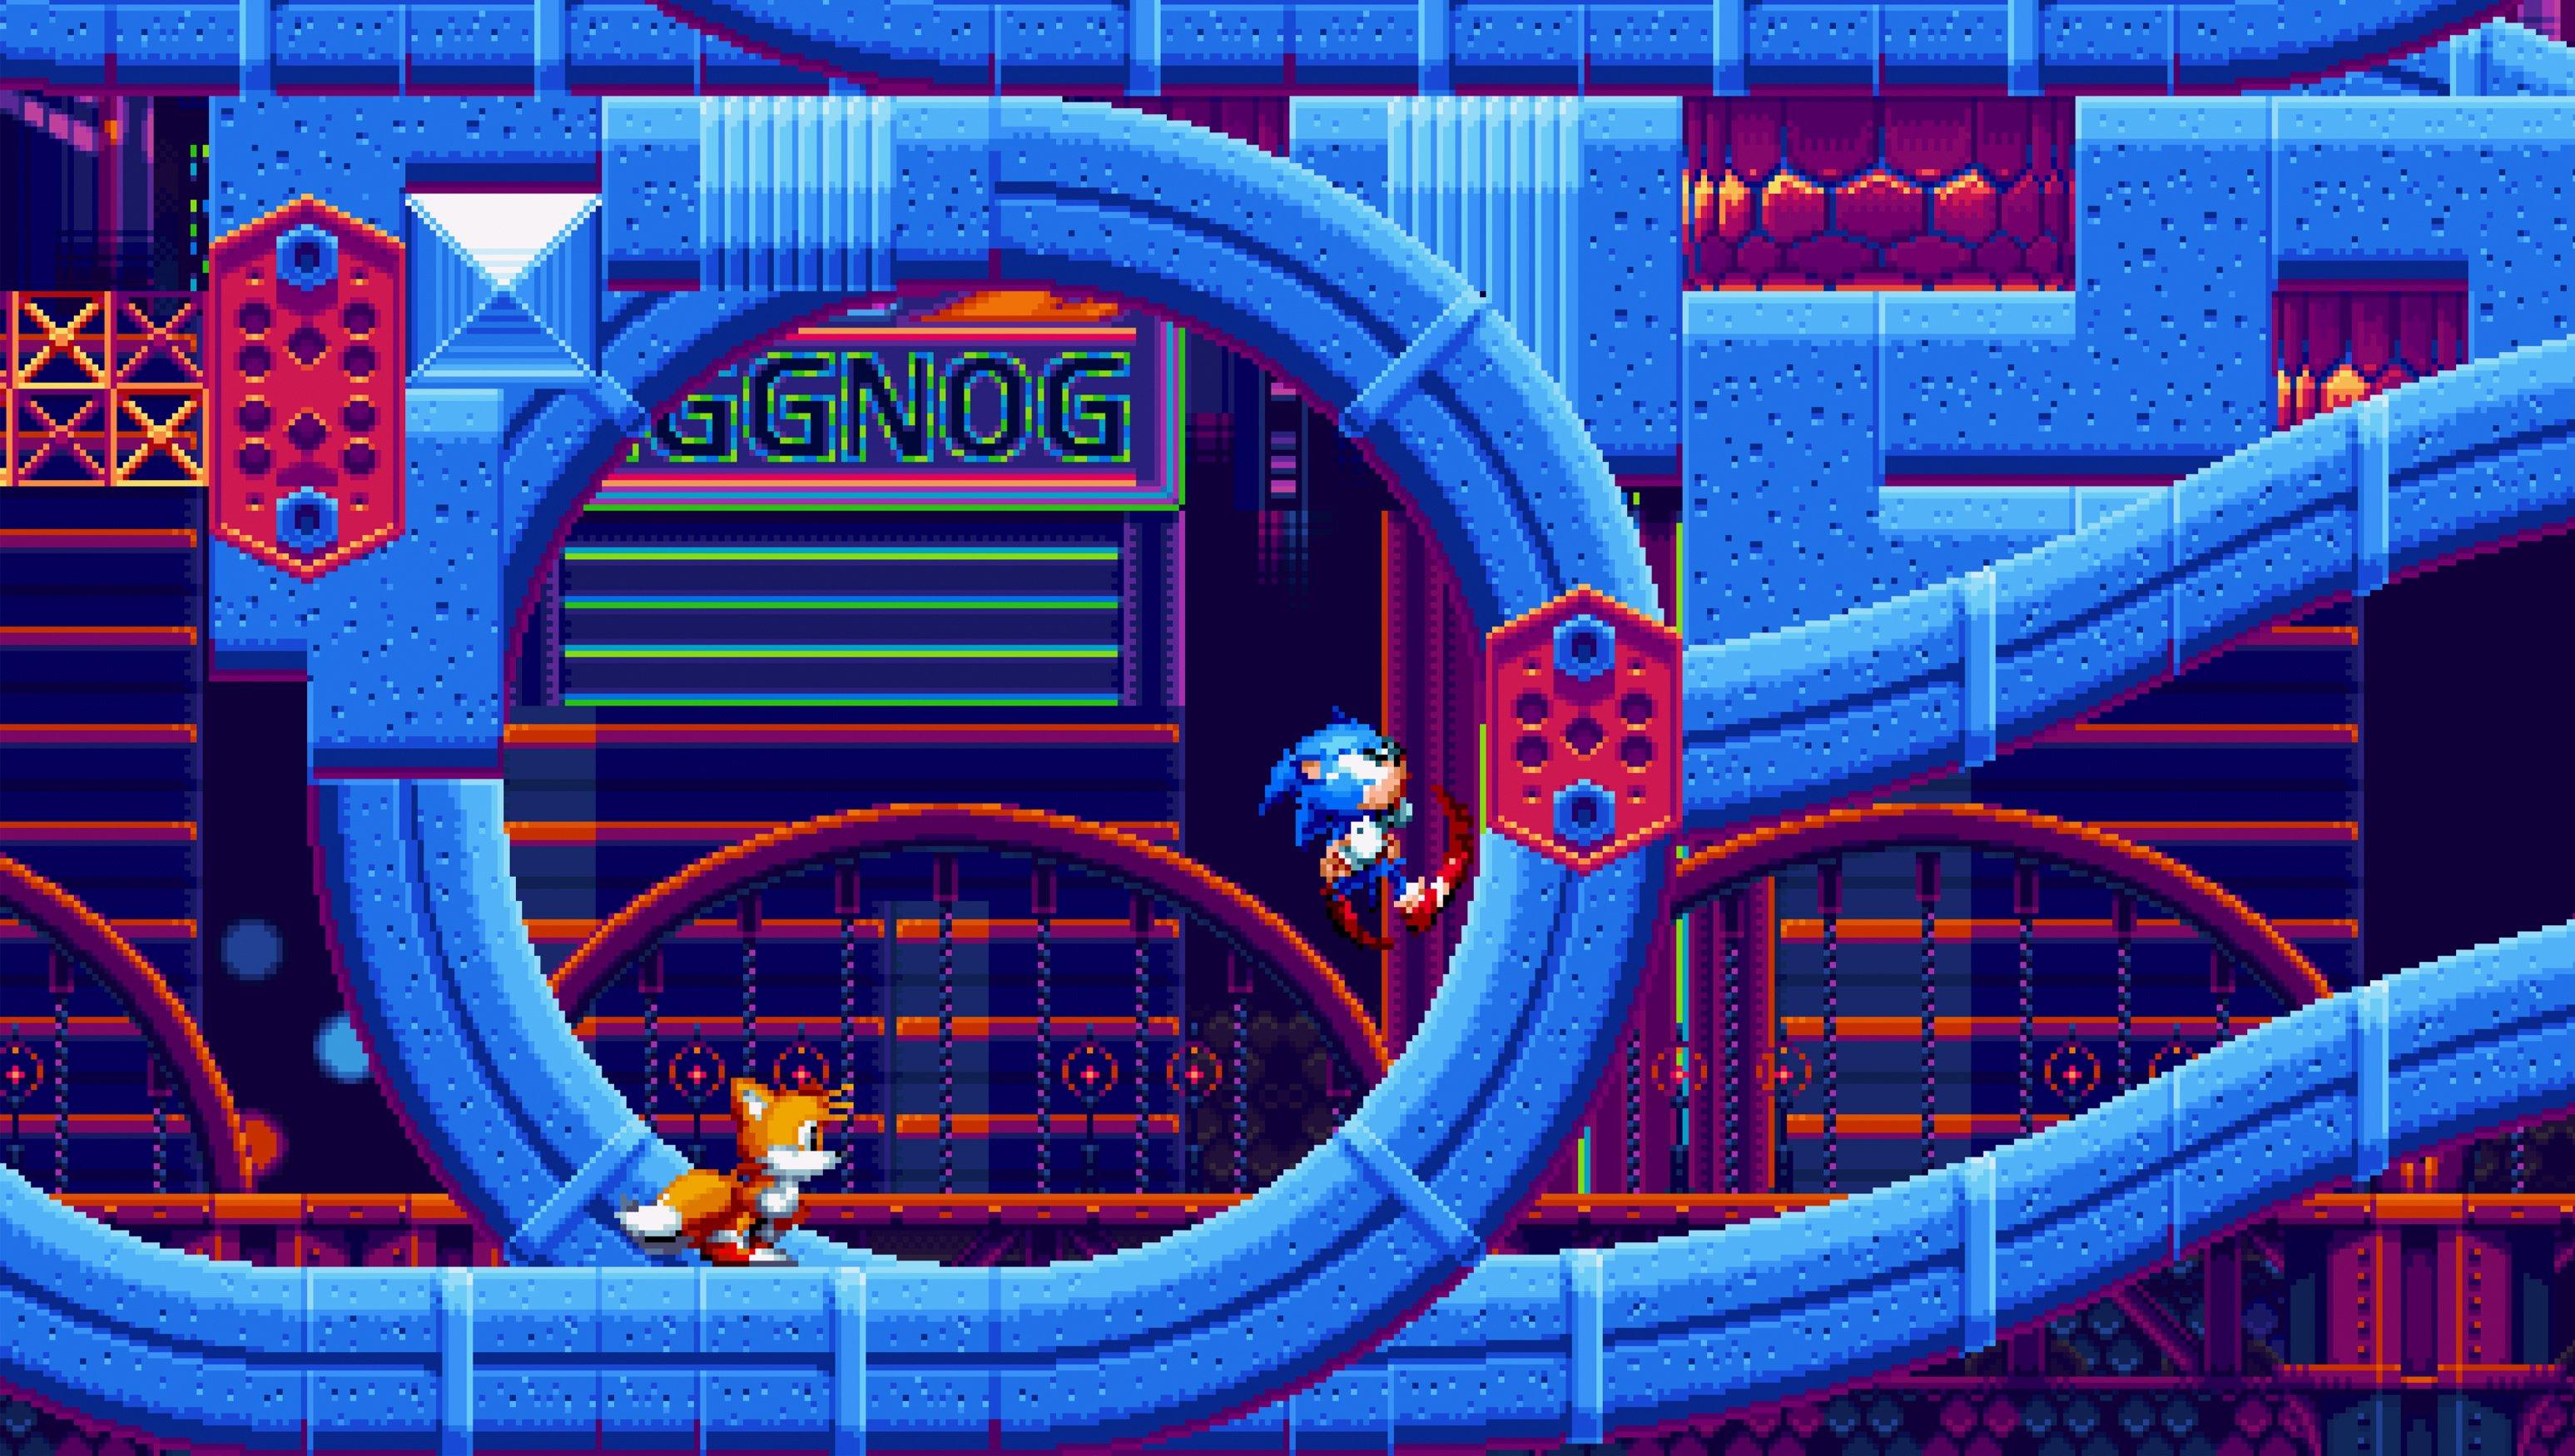  Sonic Mania Plus - PlayStation 4 : Sega of America Inc